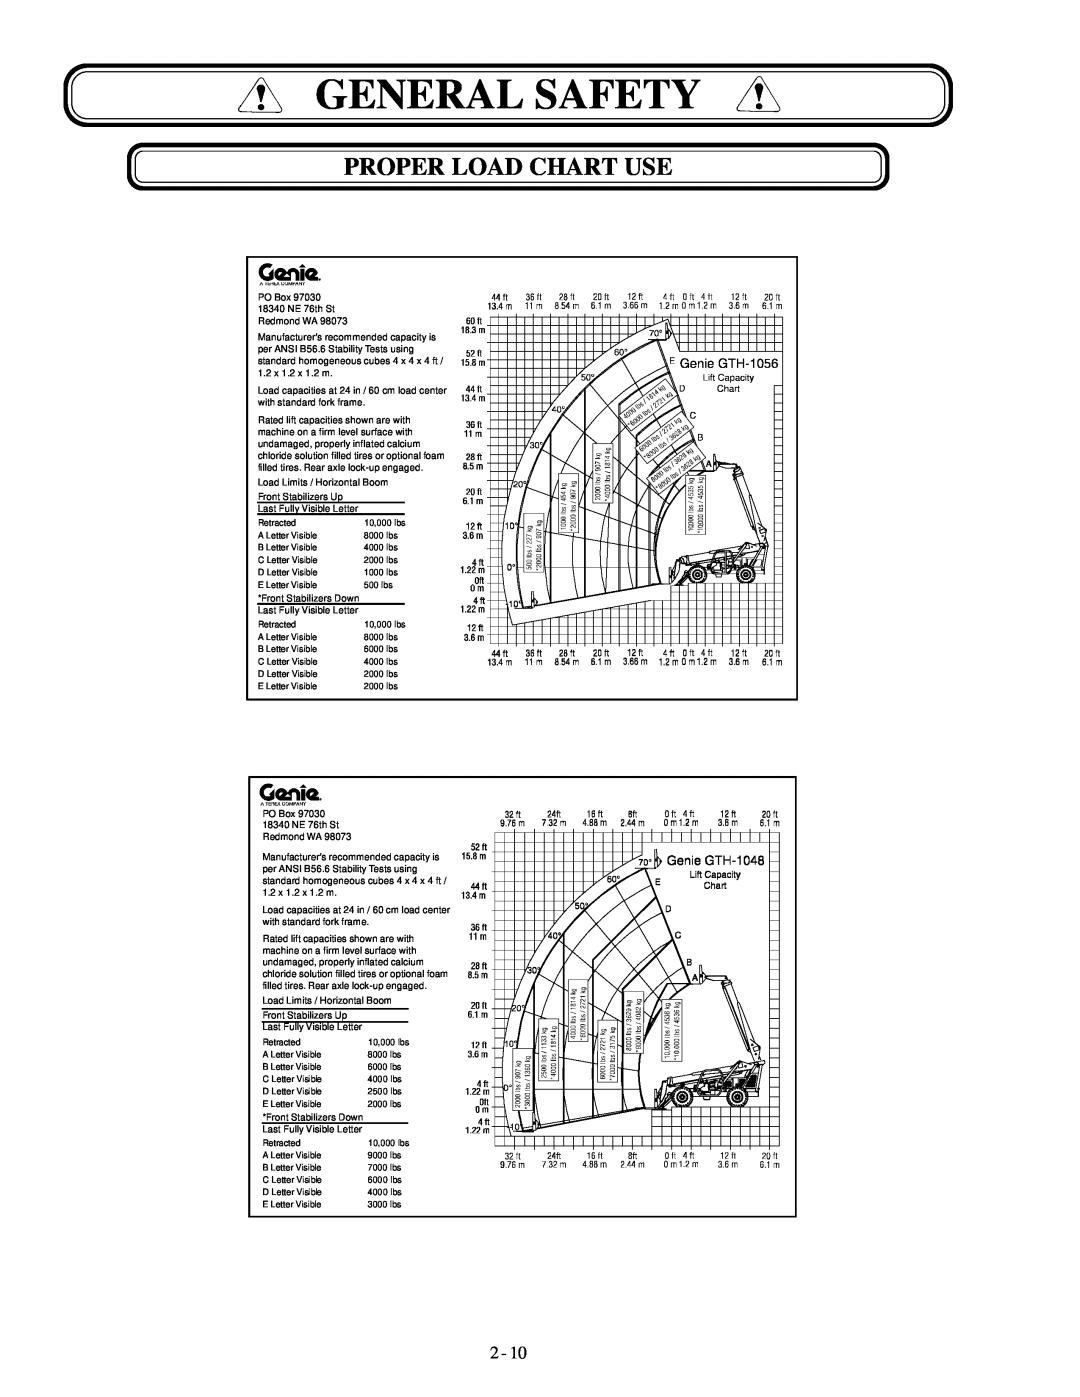 Genie GTH-1056, GTH-1048 manual General Safety, Proper Load Chart Use 